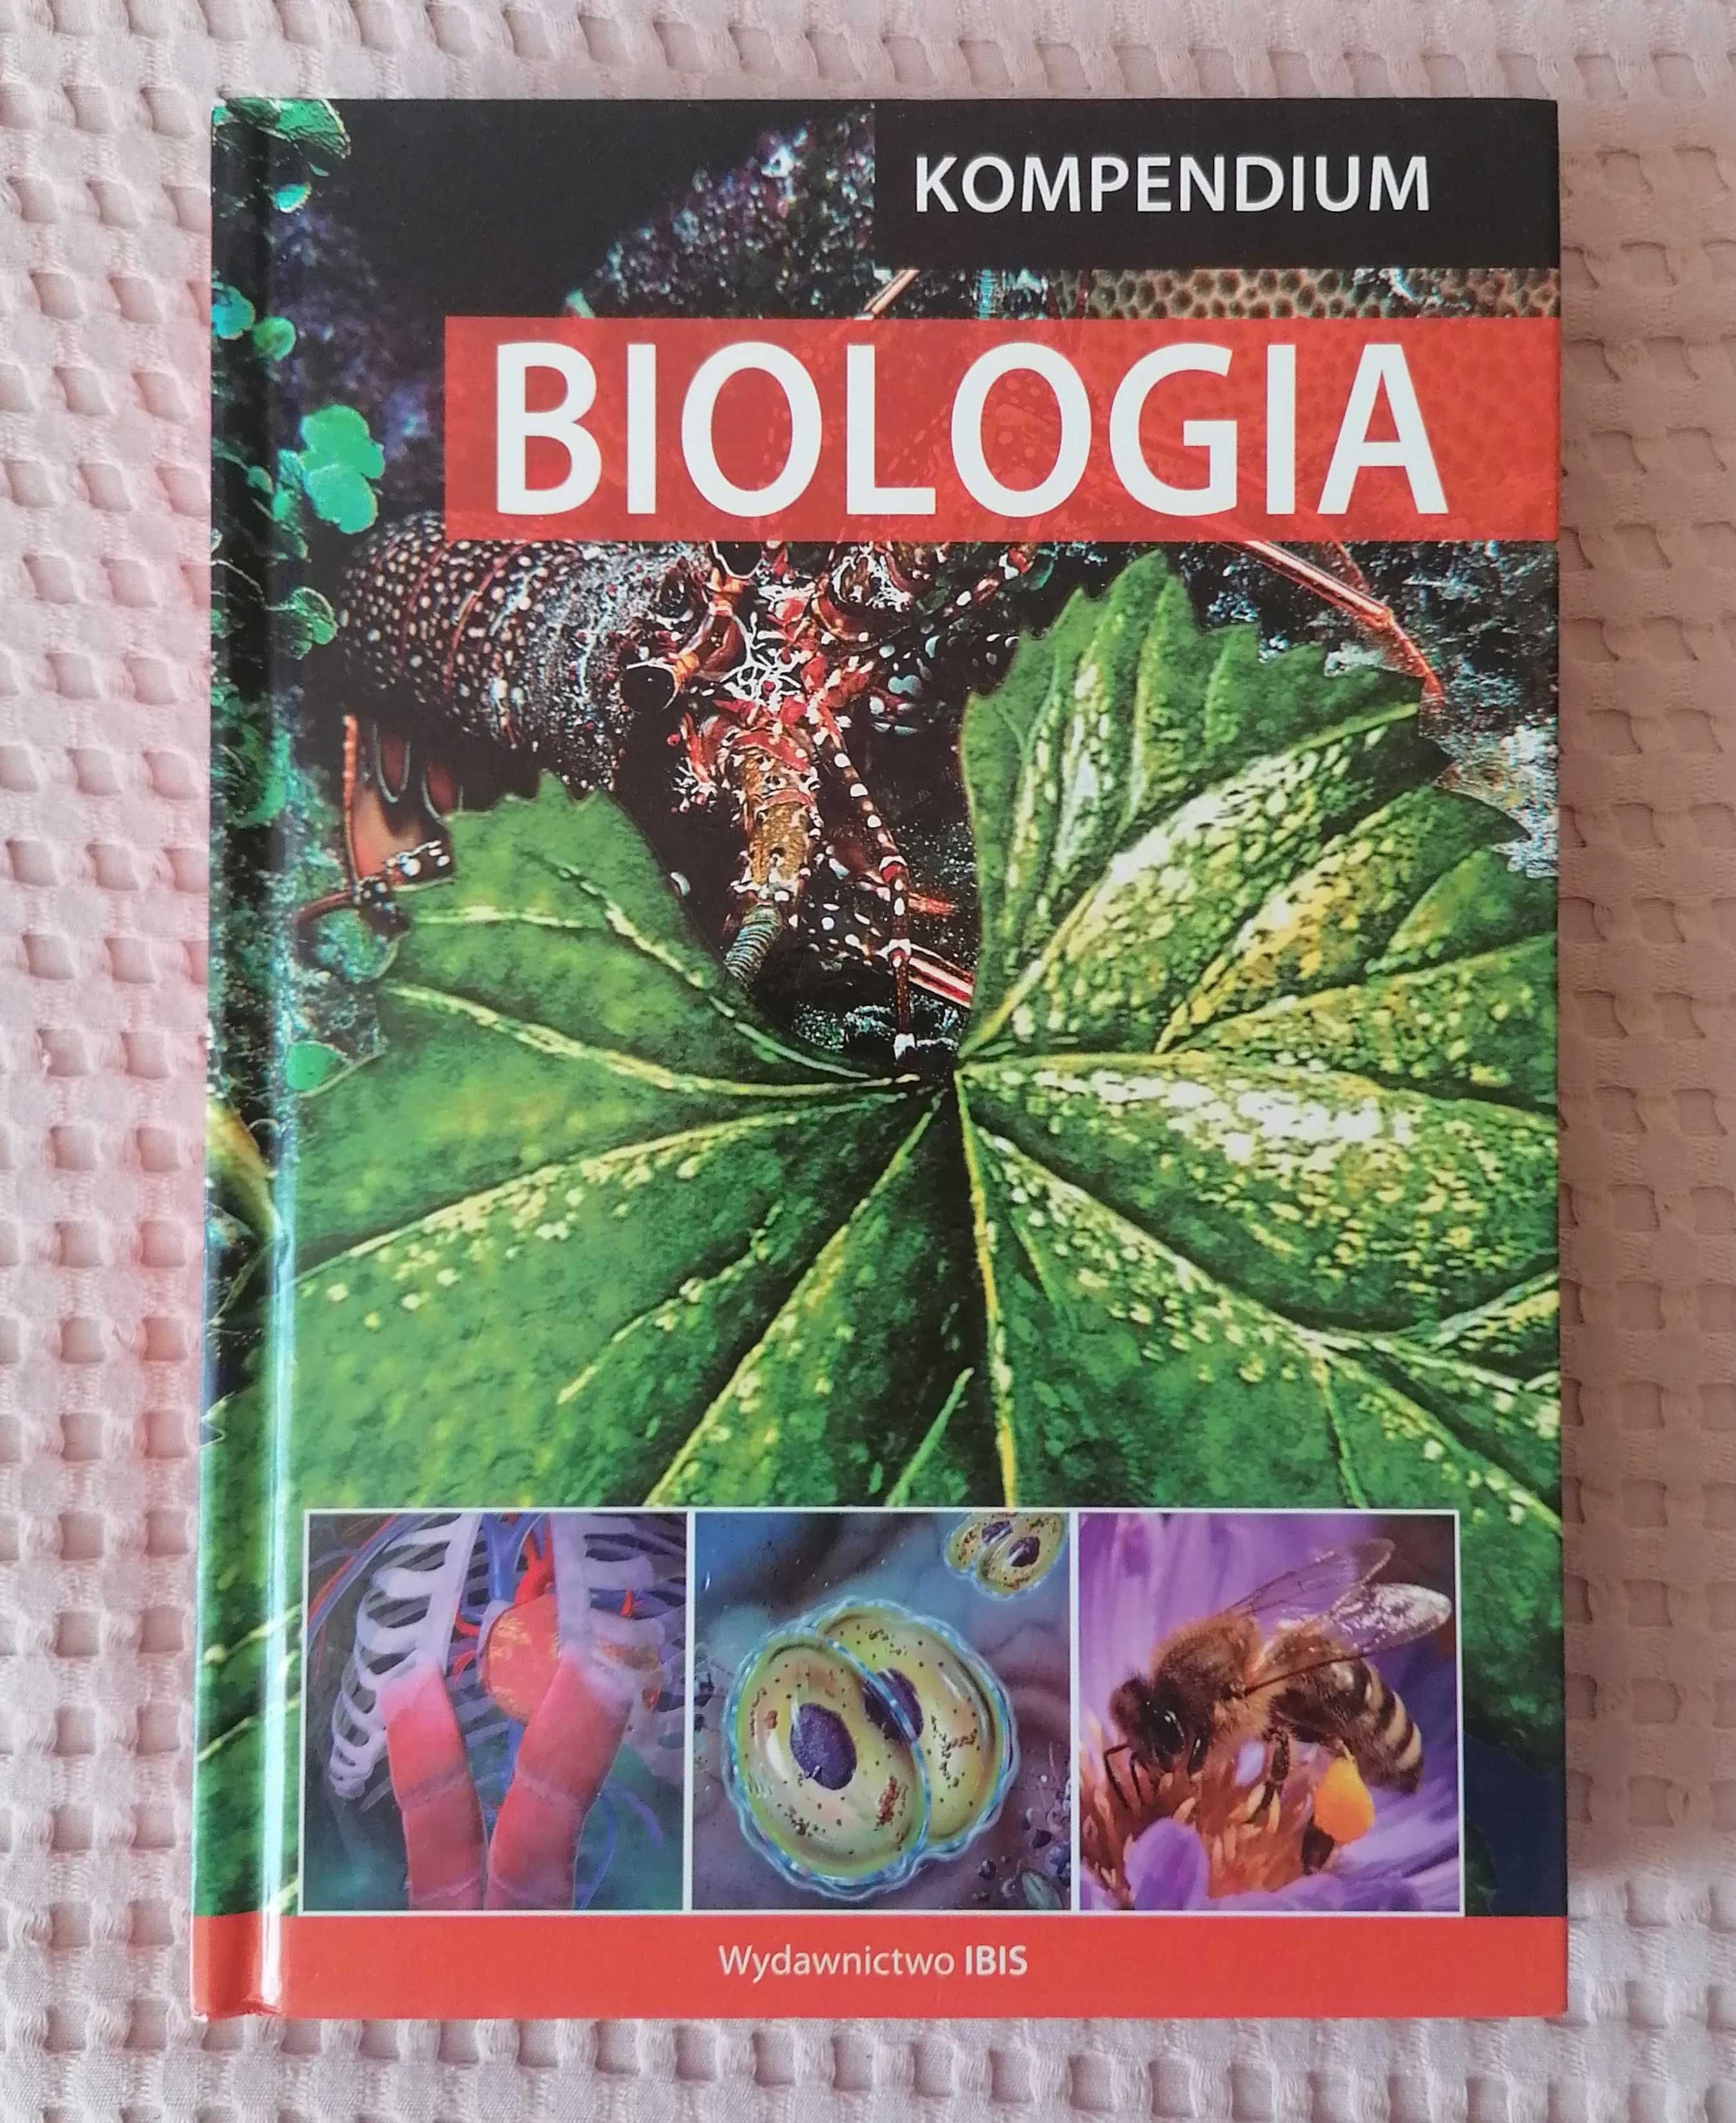 Kompedium Biologia, wydawnictwo IBIS